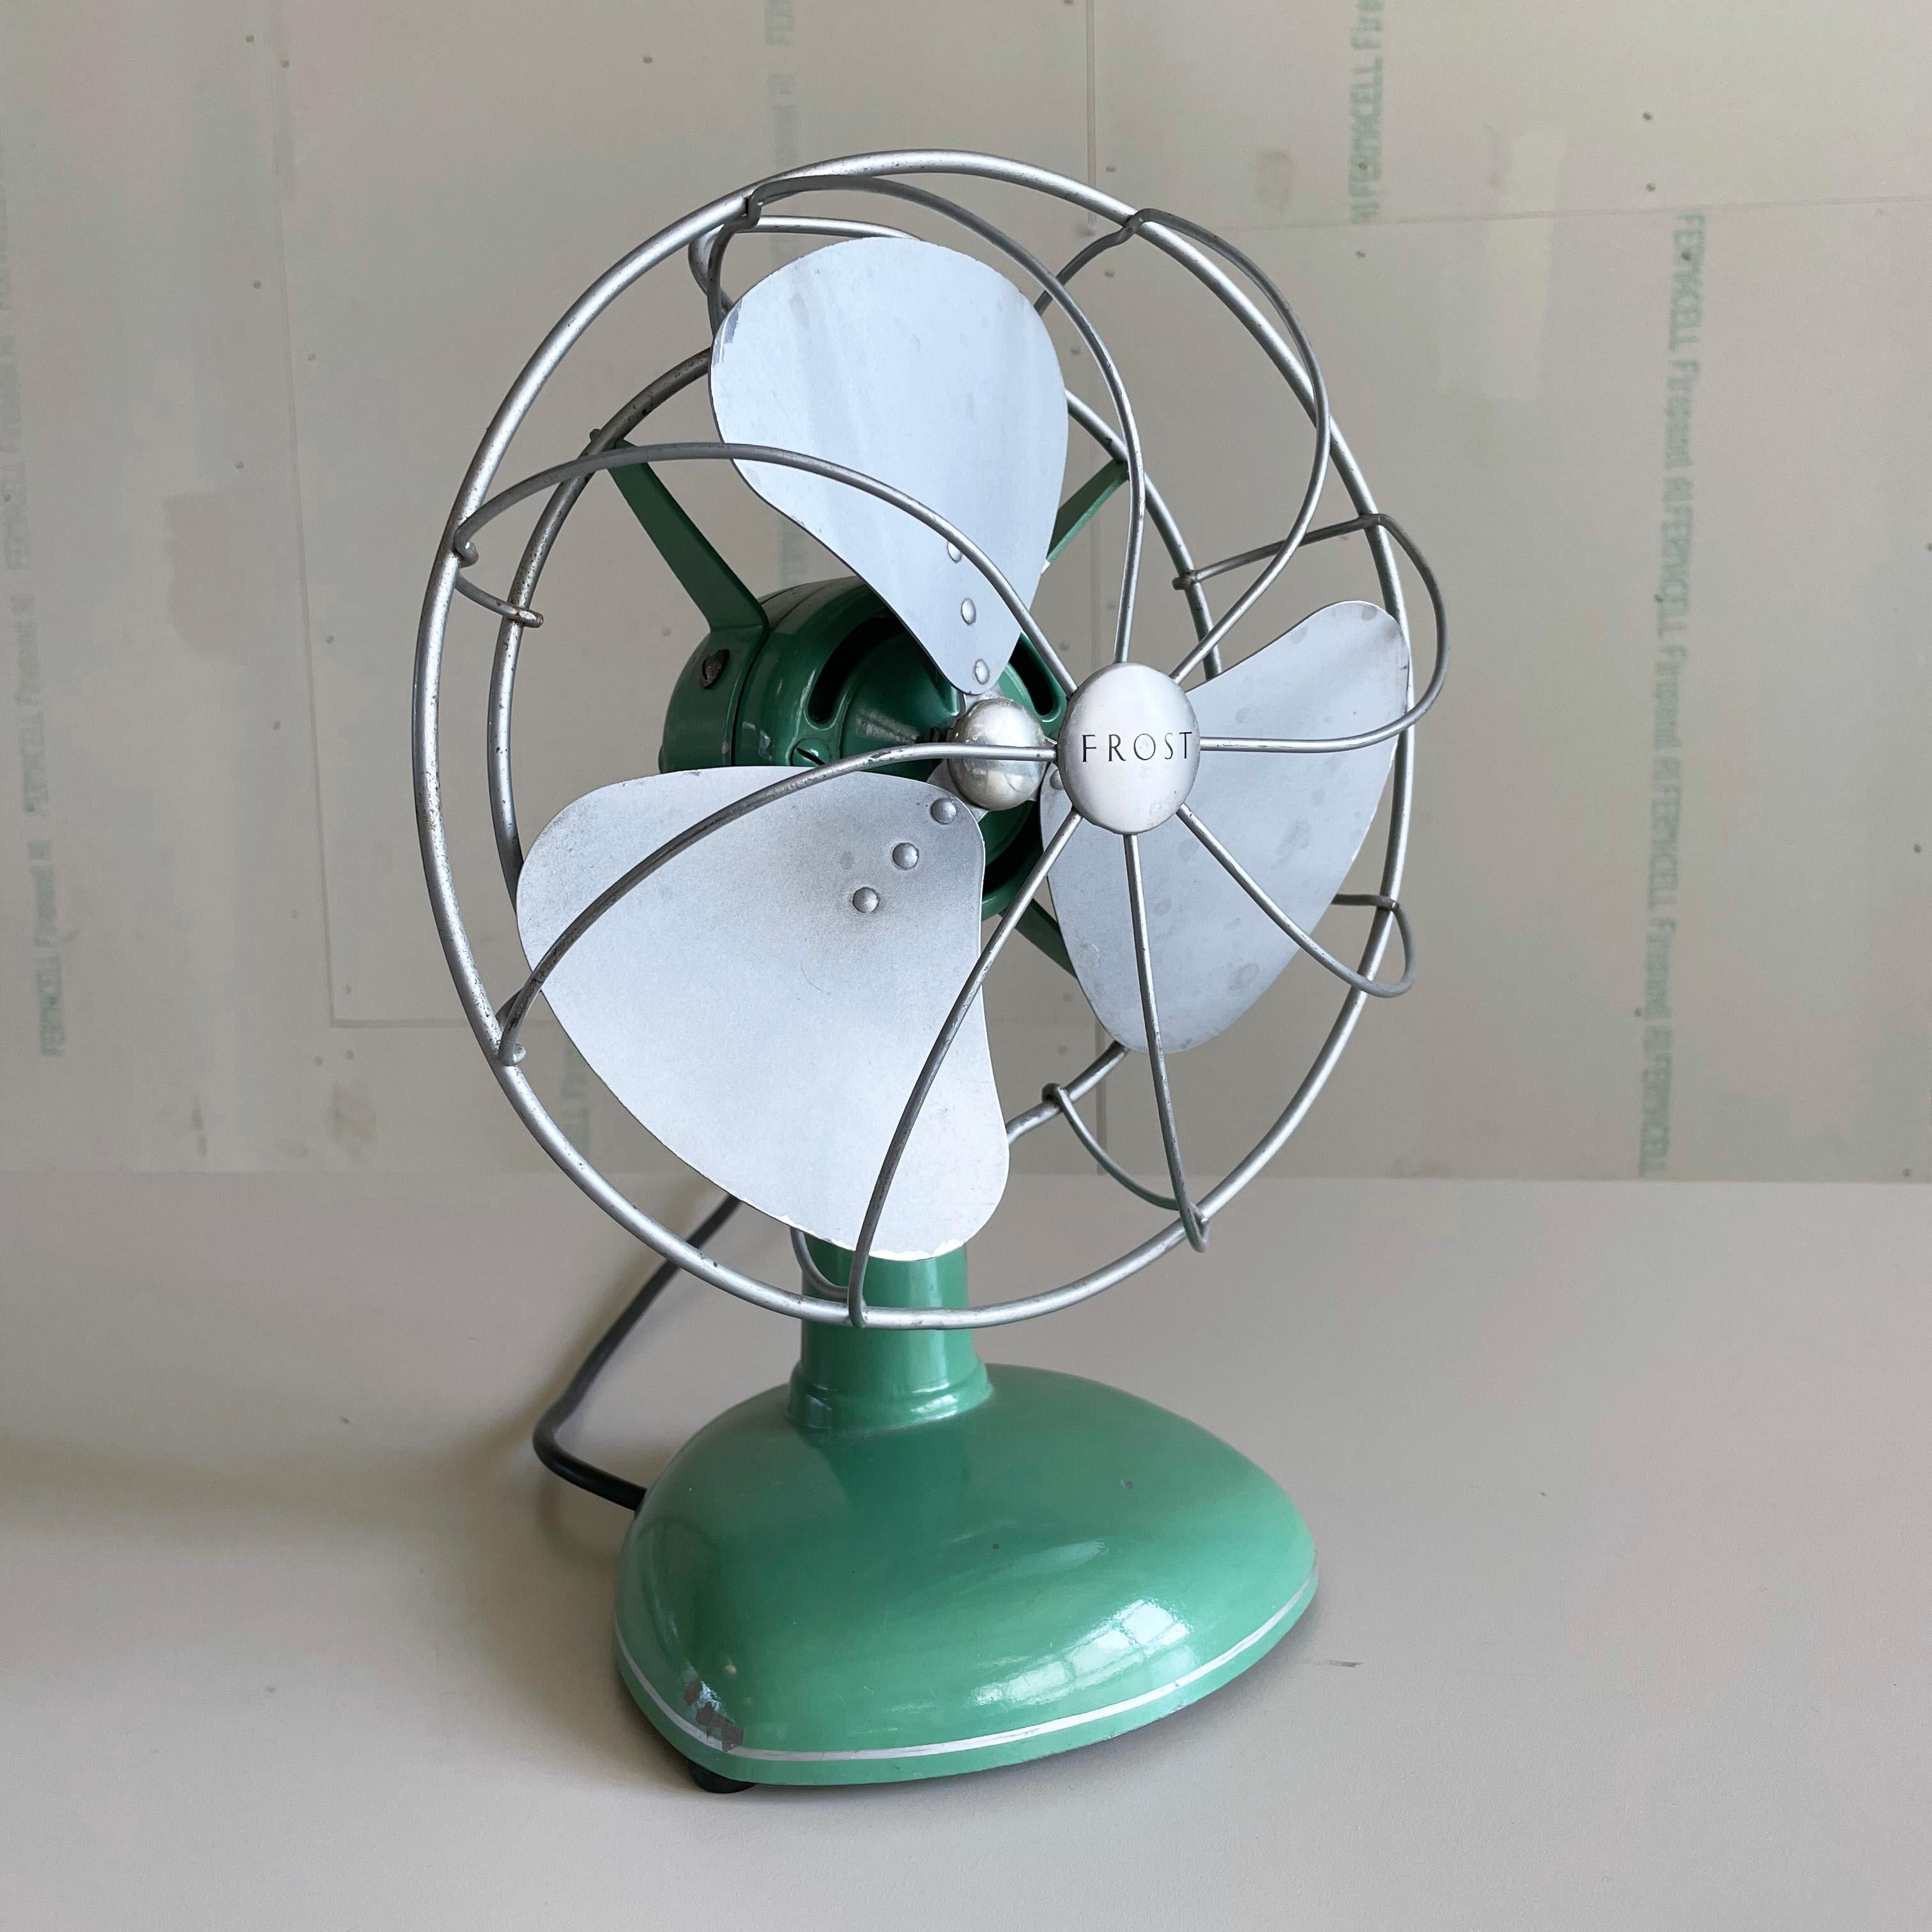 1950’s FROST triple blade oscillating desk fan / ventilator In Good Condition For Sale In Bern, CH